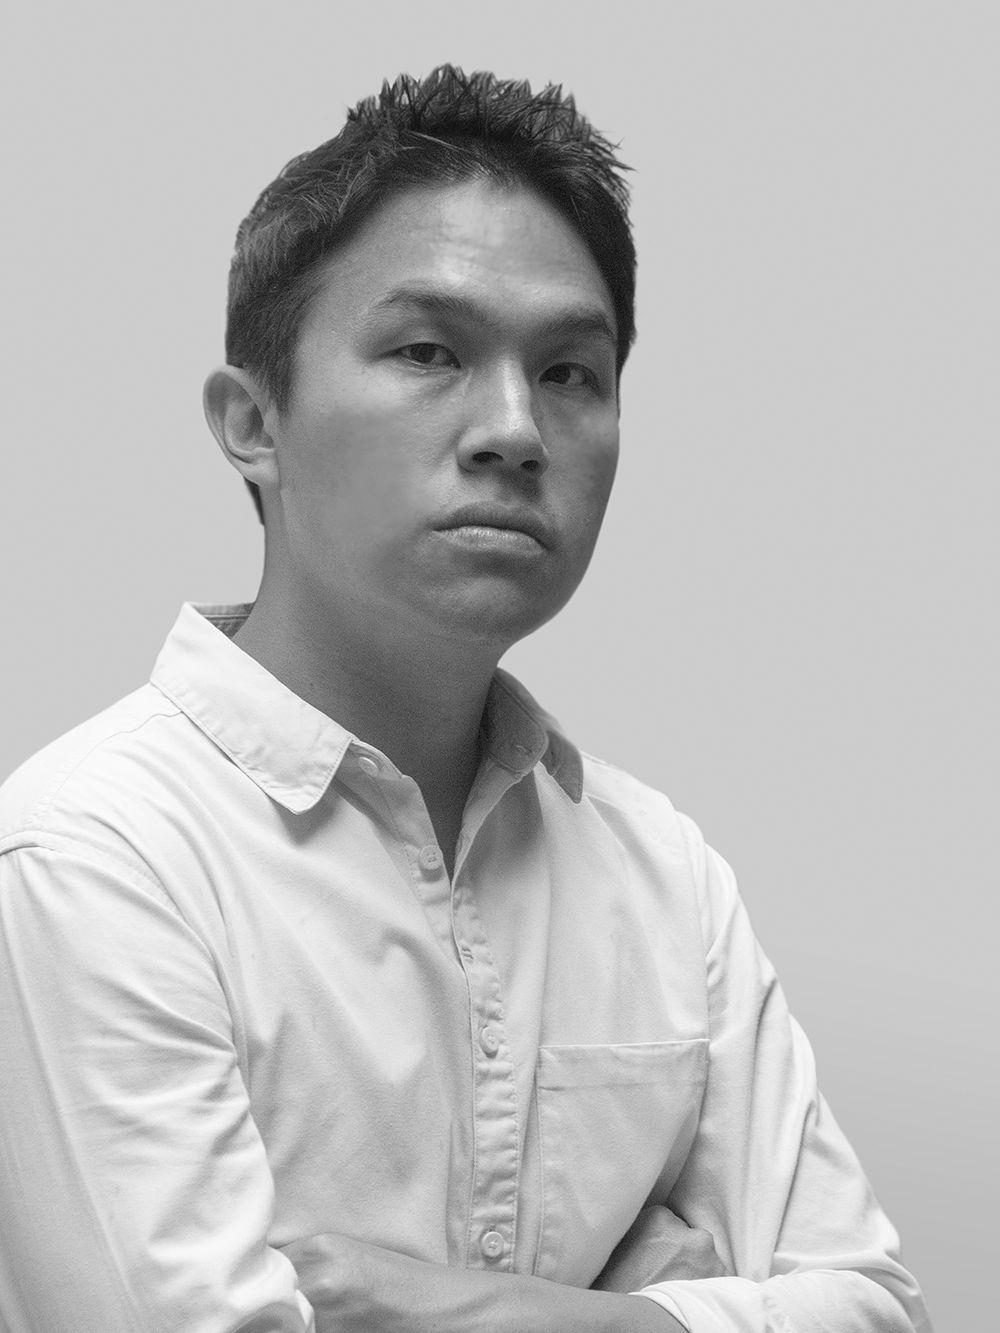 Designer Gabriel Tan